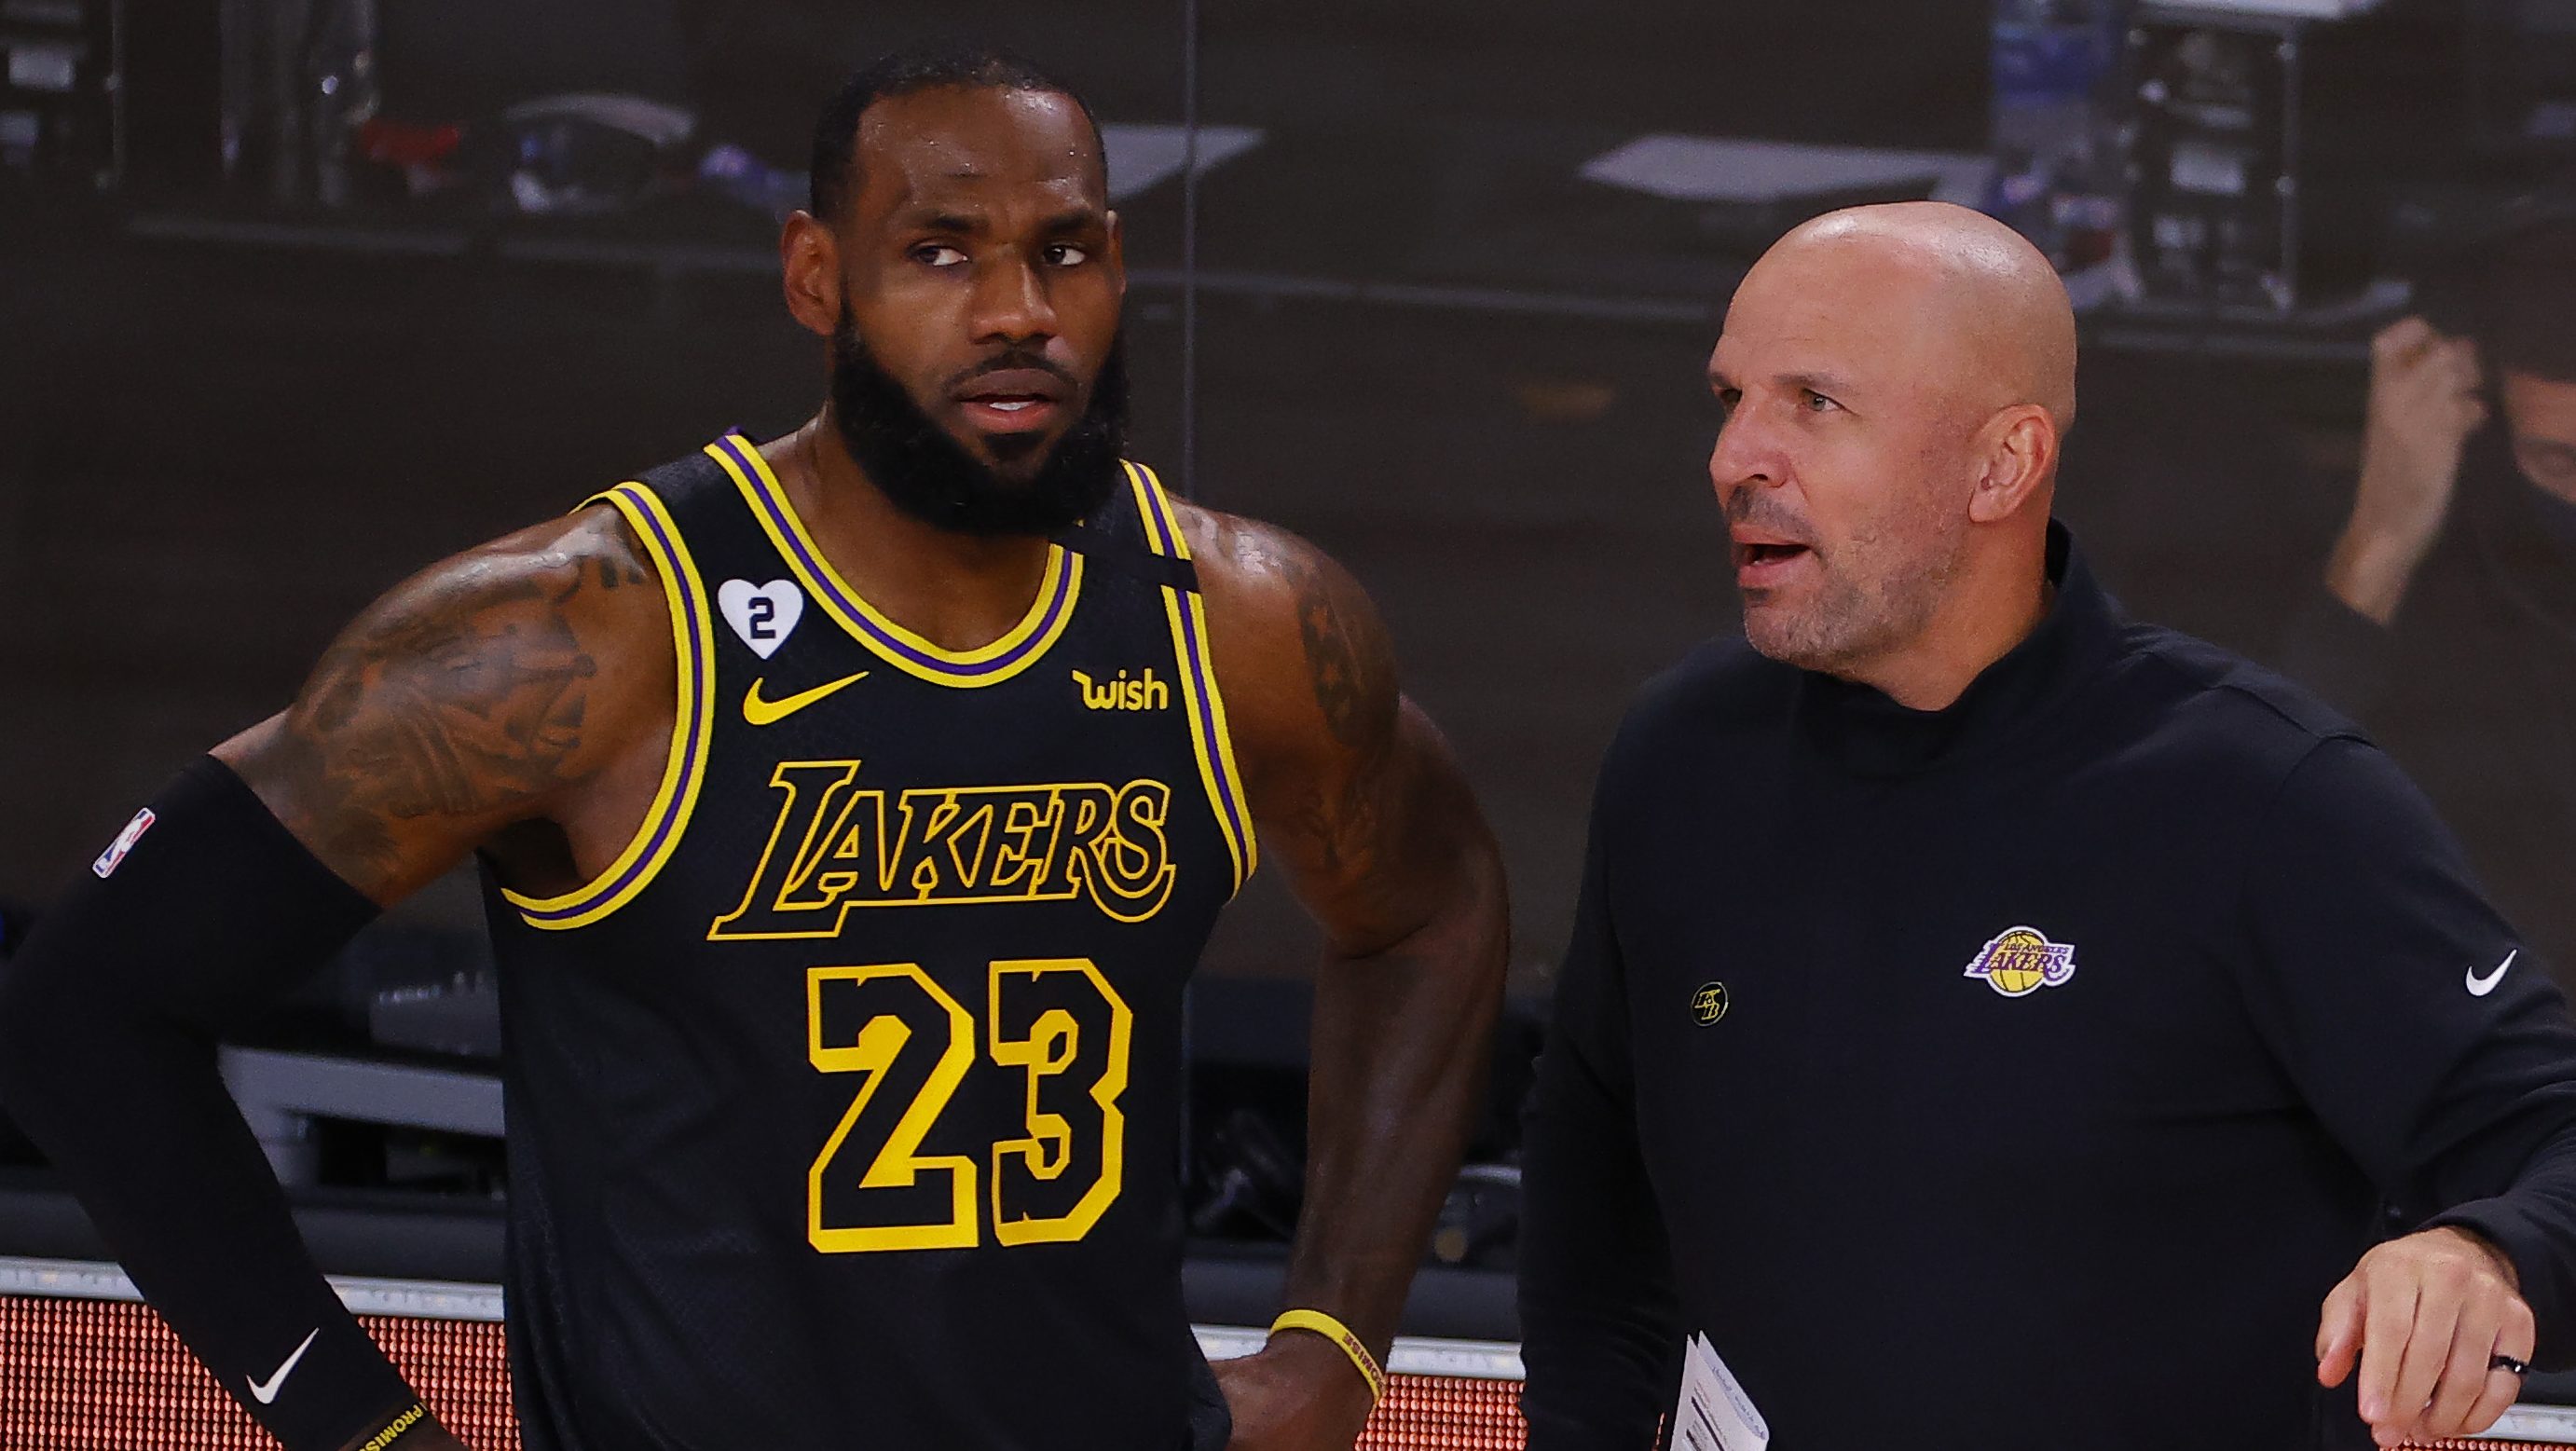 Nets hire Jason Kidd as head coach - Sports Illustrated